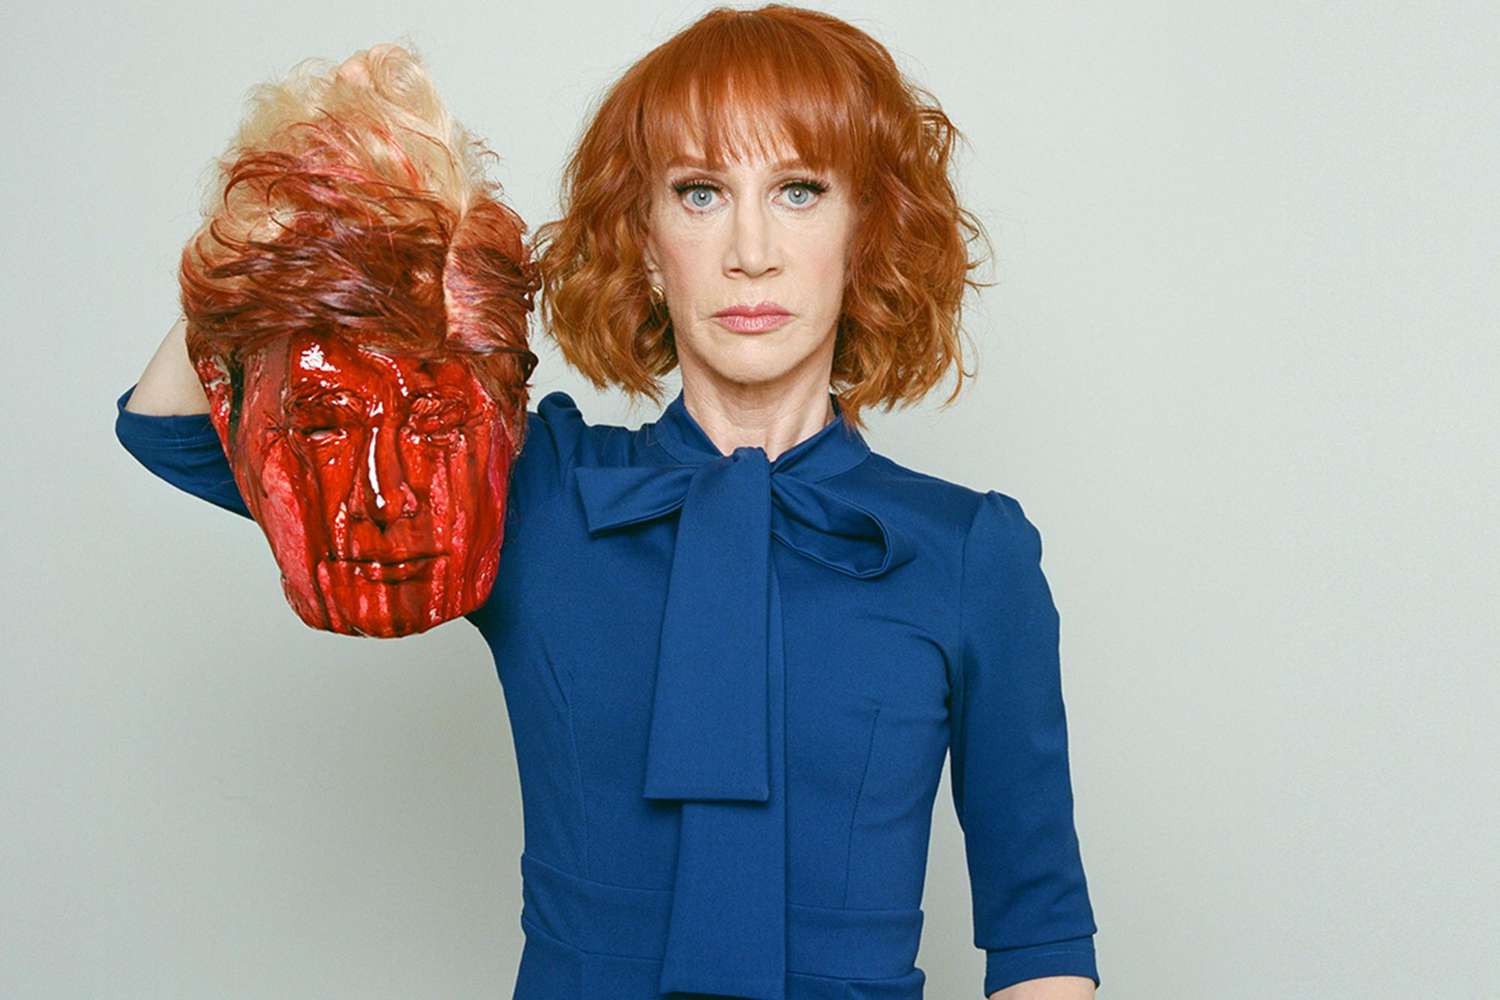 Kathy Griffin Trump photo: Tyler Shields explains decapitated image | EW.com